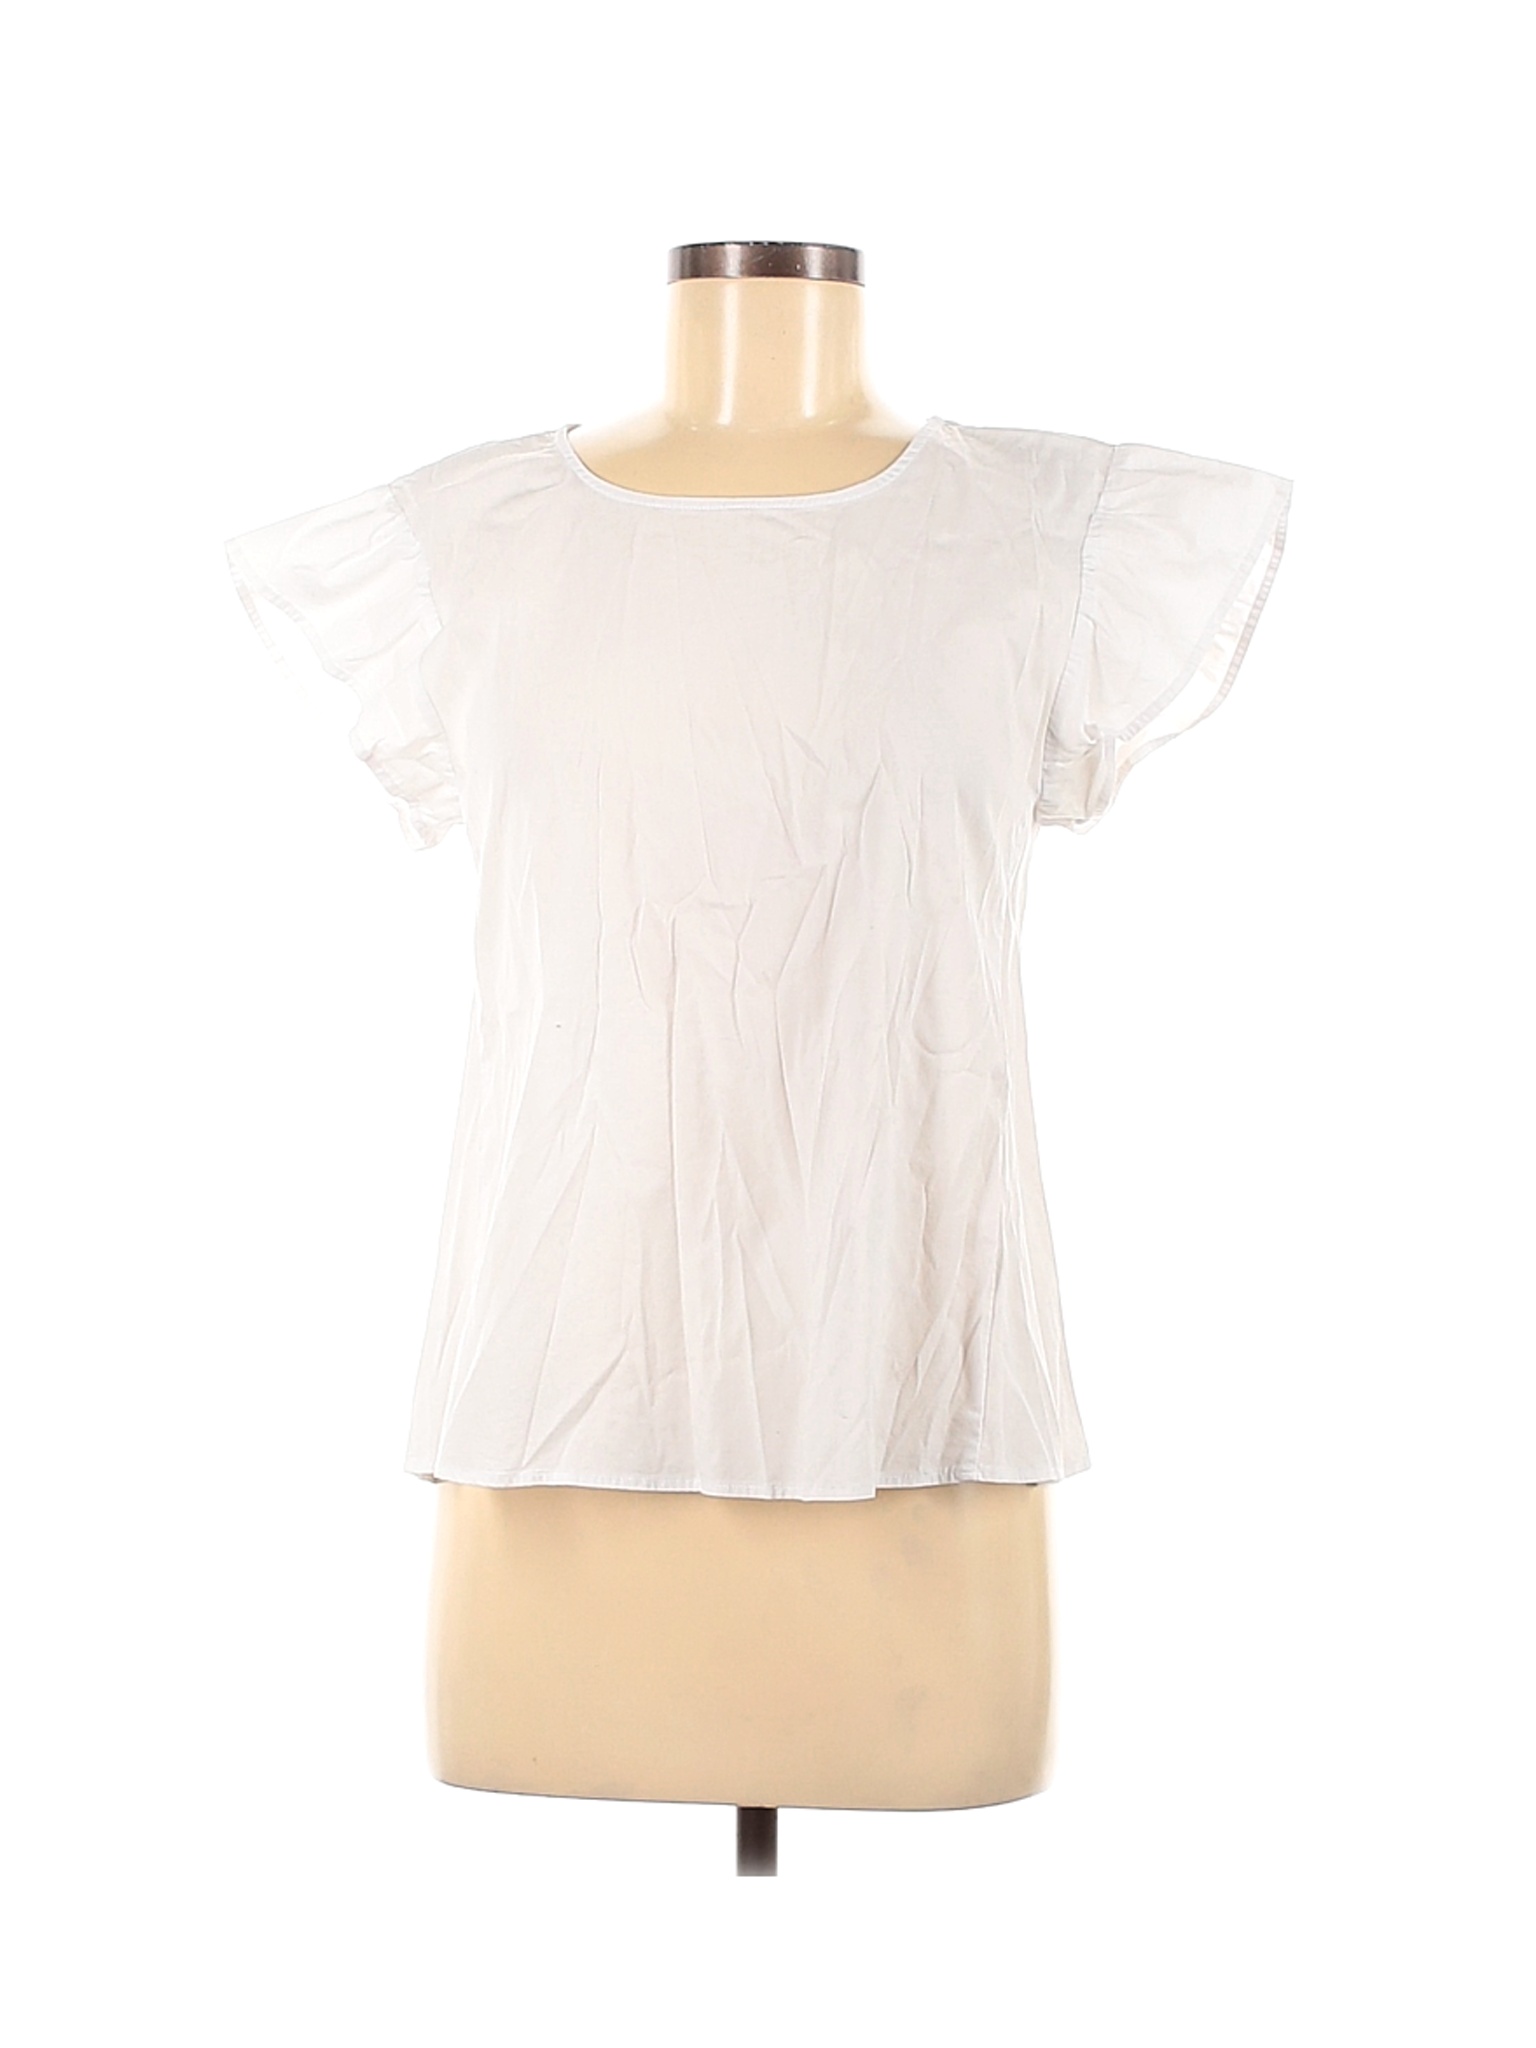 Bobeau Women White Short Sleeve Blouse M | eBay